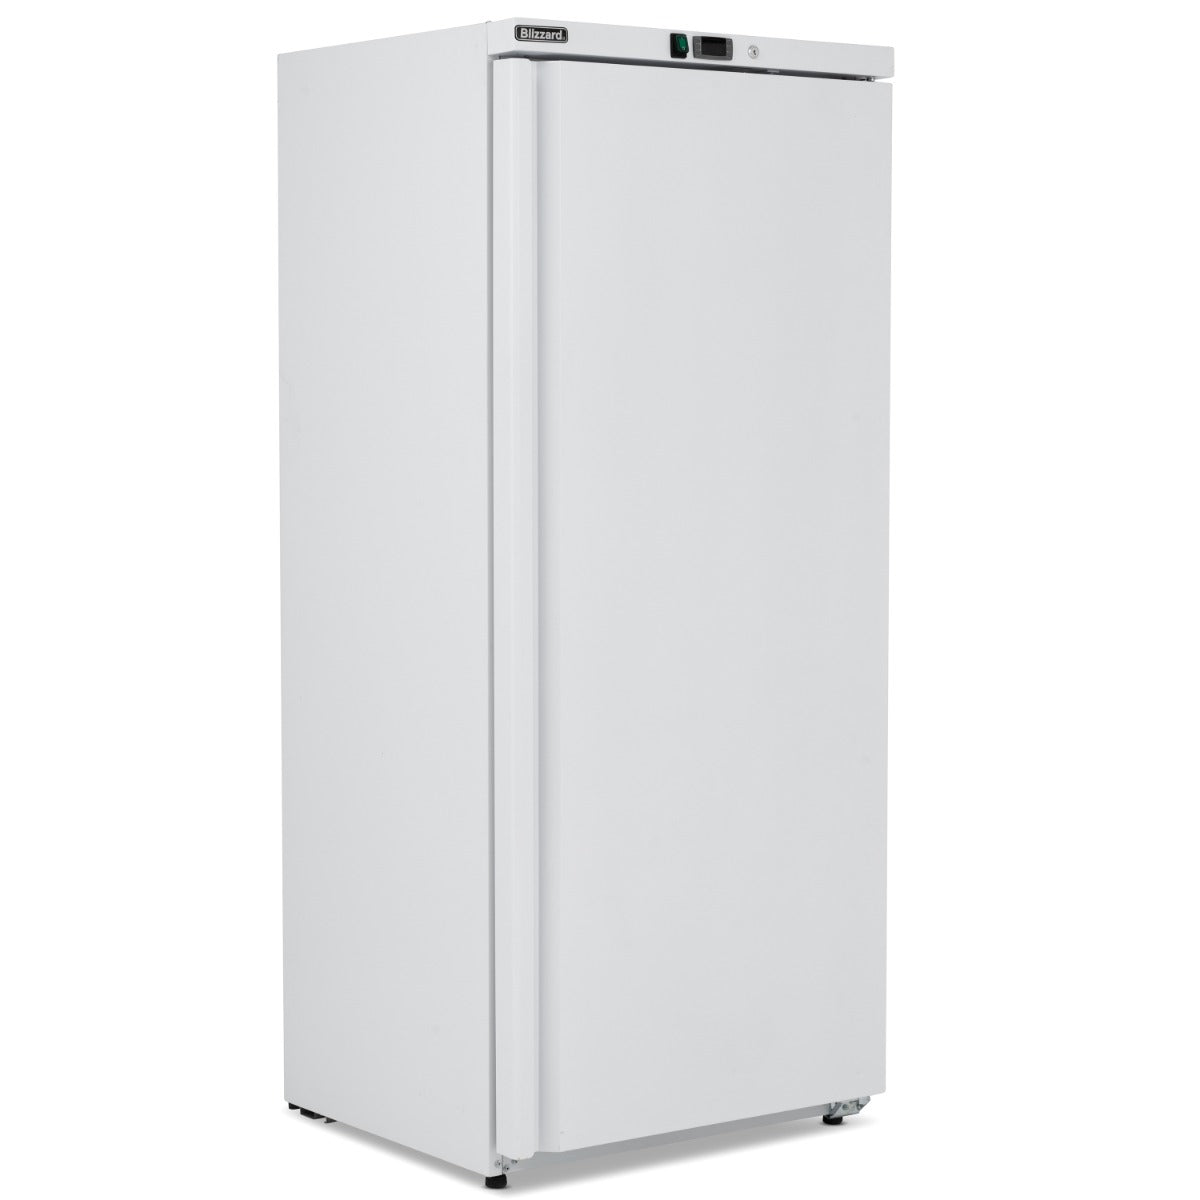 Blizzard Single Door White Laminated Refrigerator